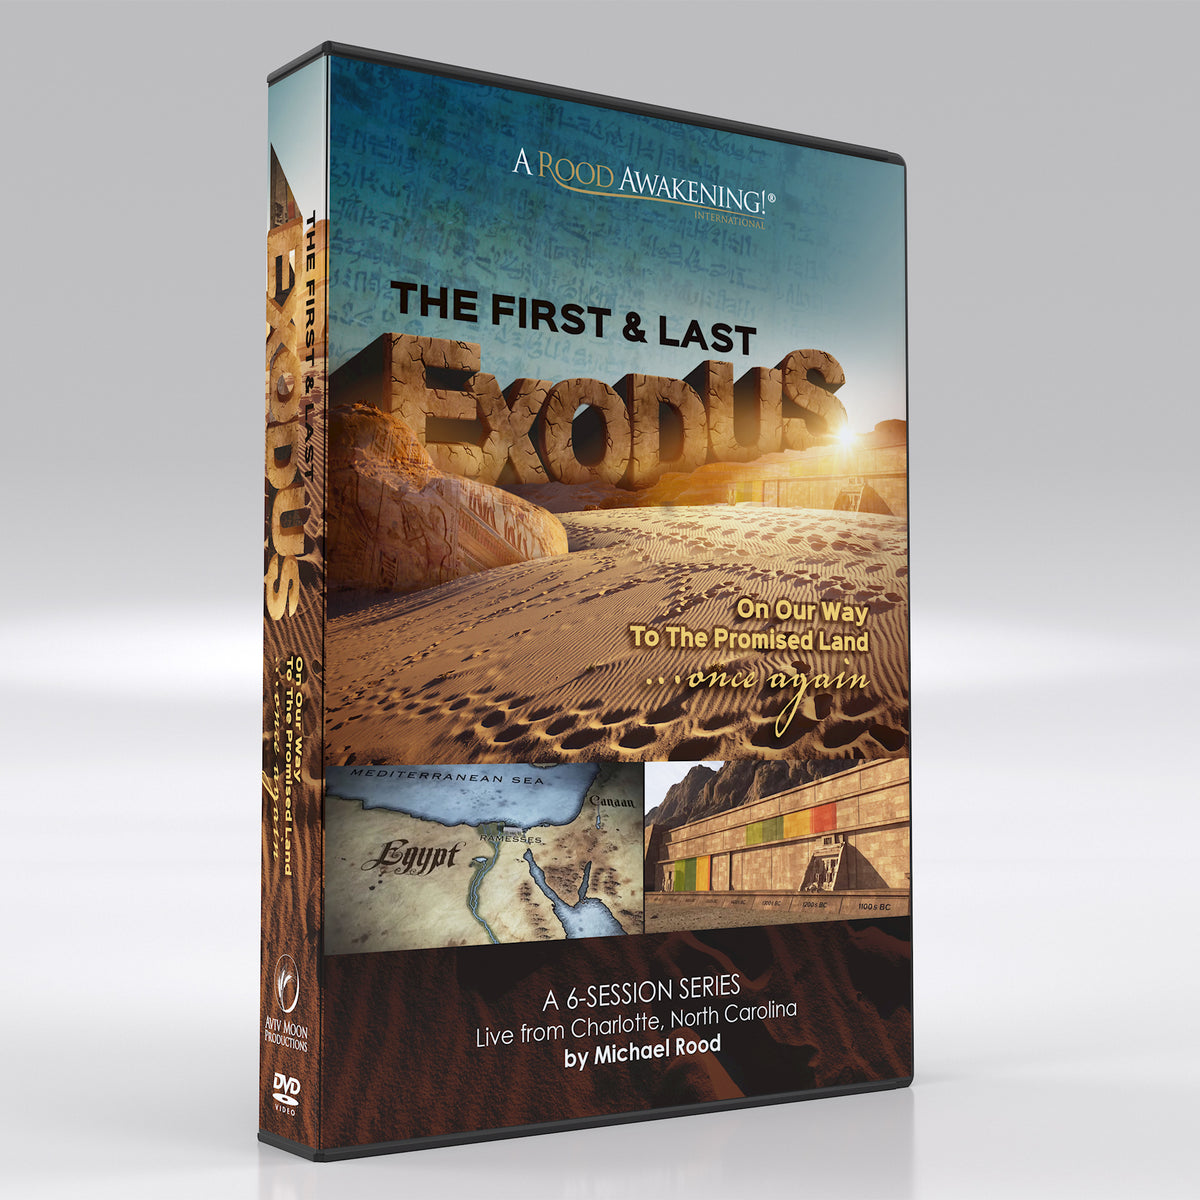 The First and Last Exodus – A Rood Awakening! International